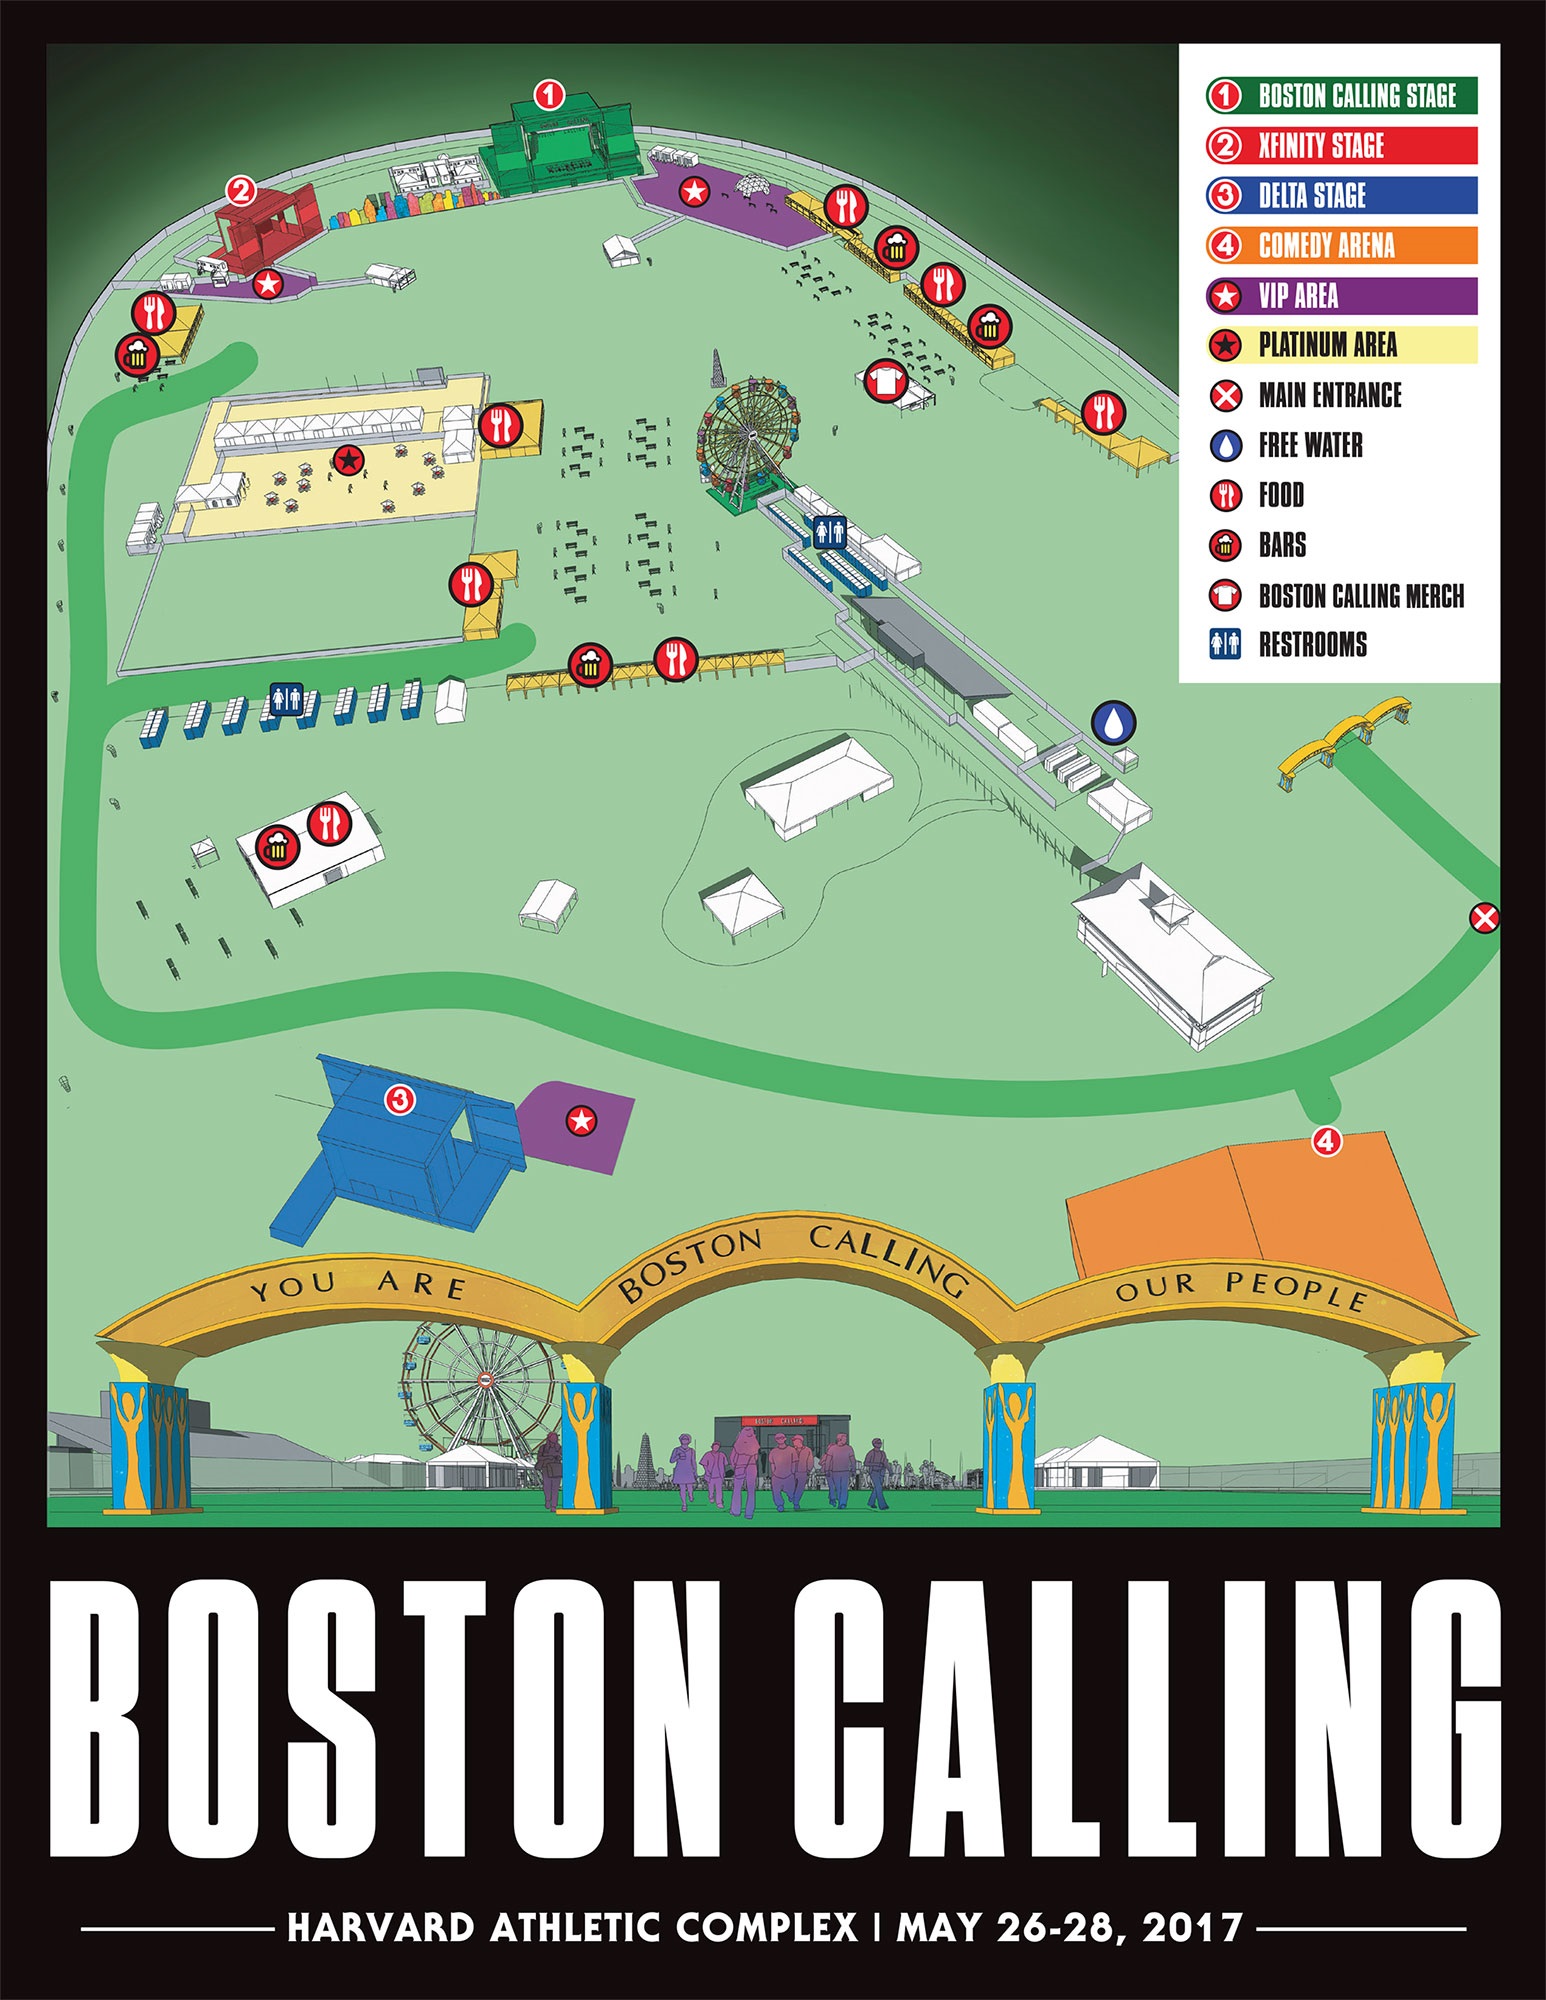 Boston Calling 2017 grounds